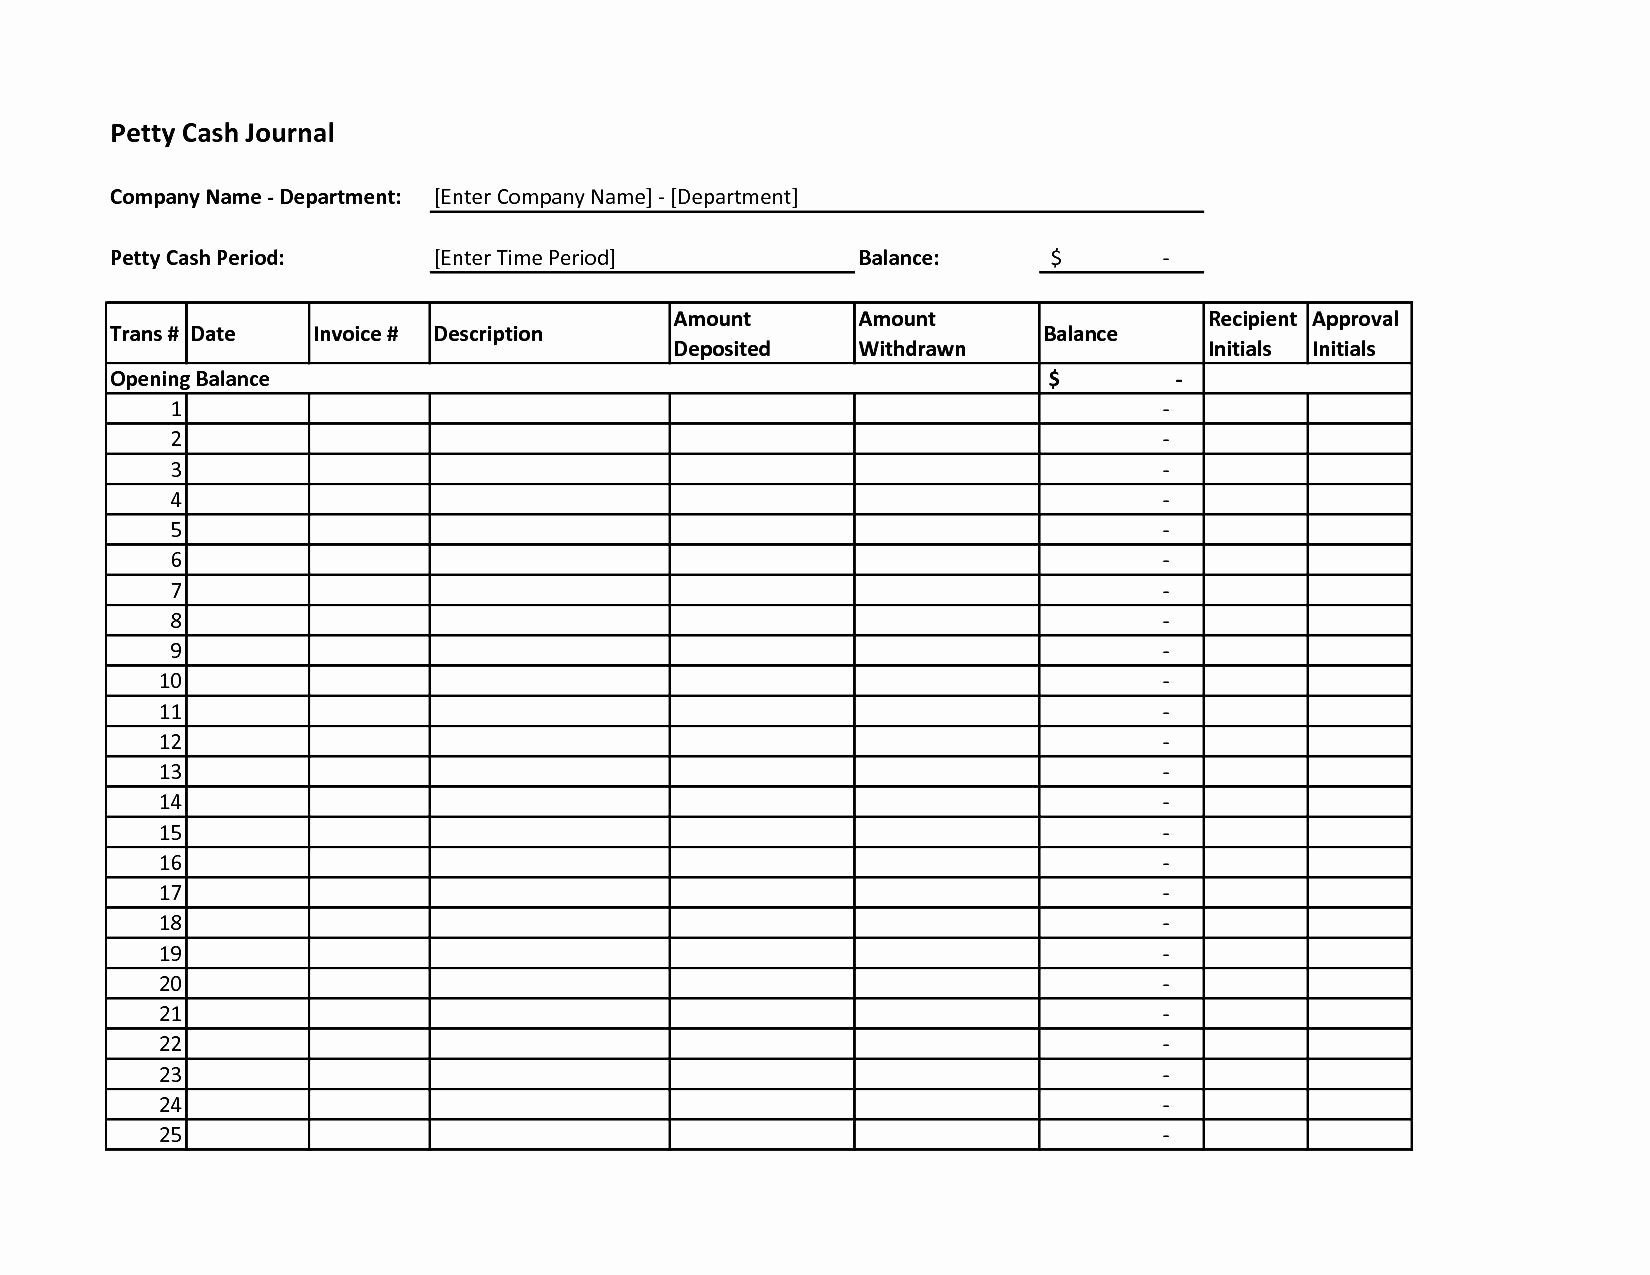 Daily Cash Report Template Excel Unique Cash Report Template Portablegasgrillweber